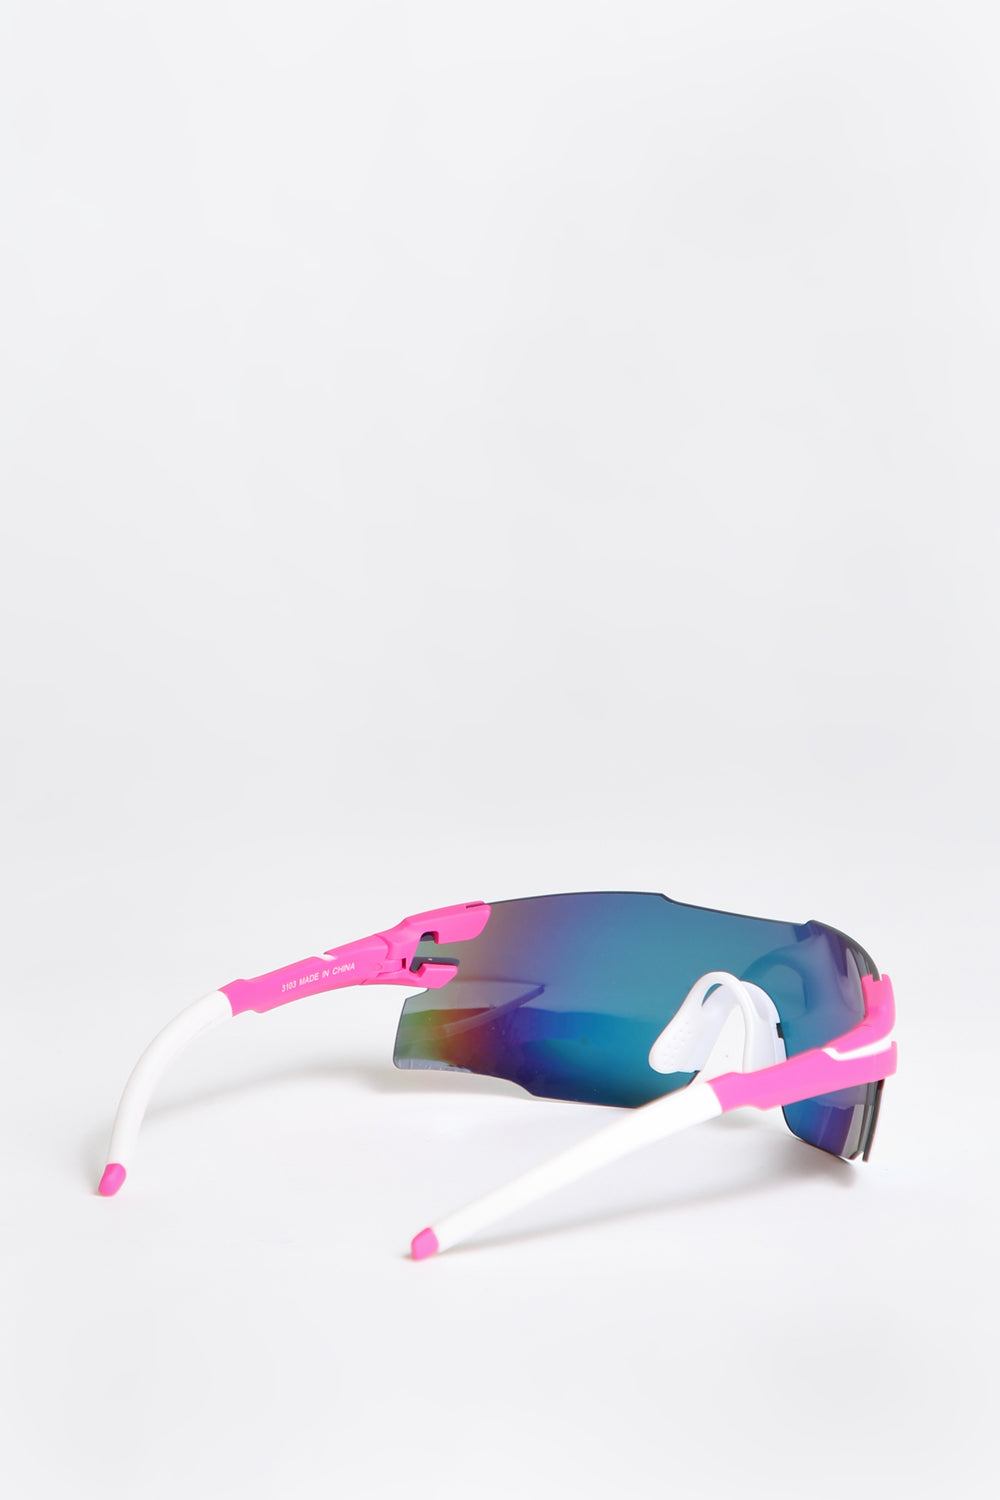 West49 Sport Shield Sunglasses West49 Sport Shield Sunglasses